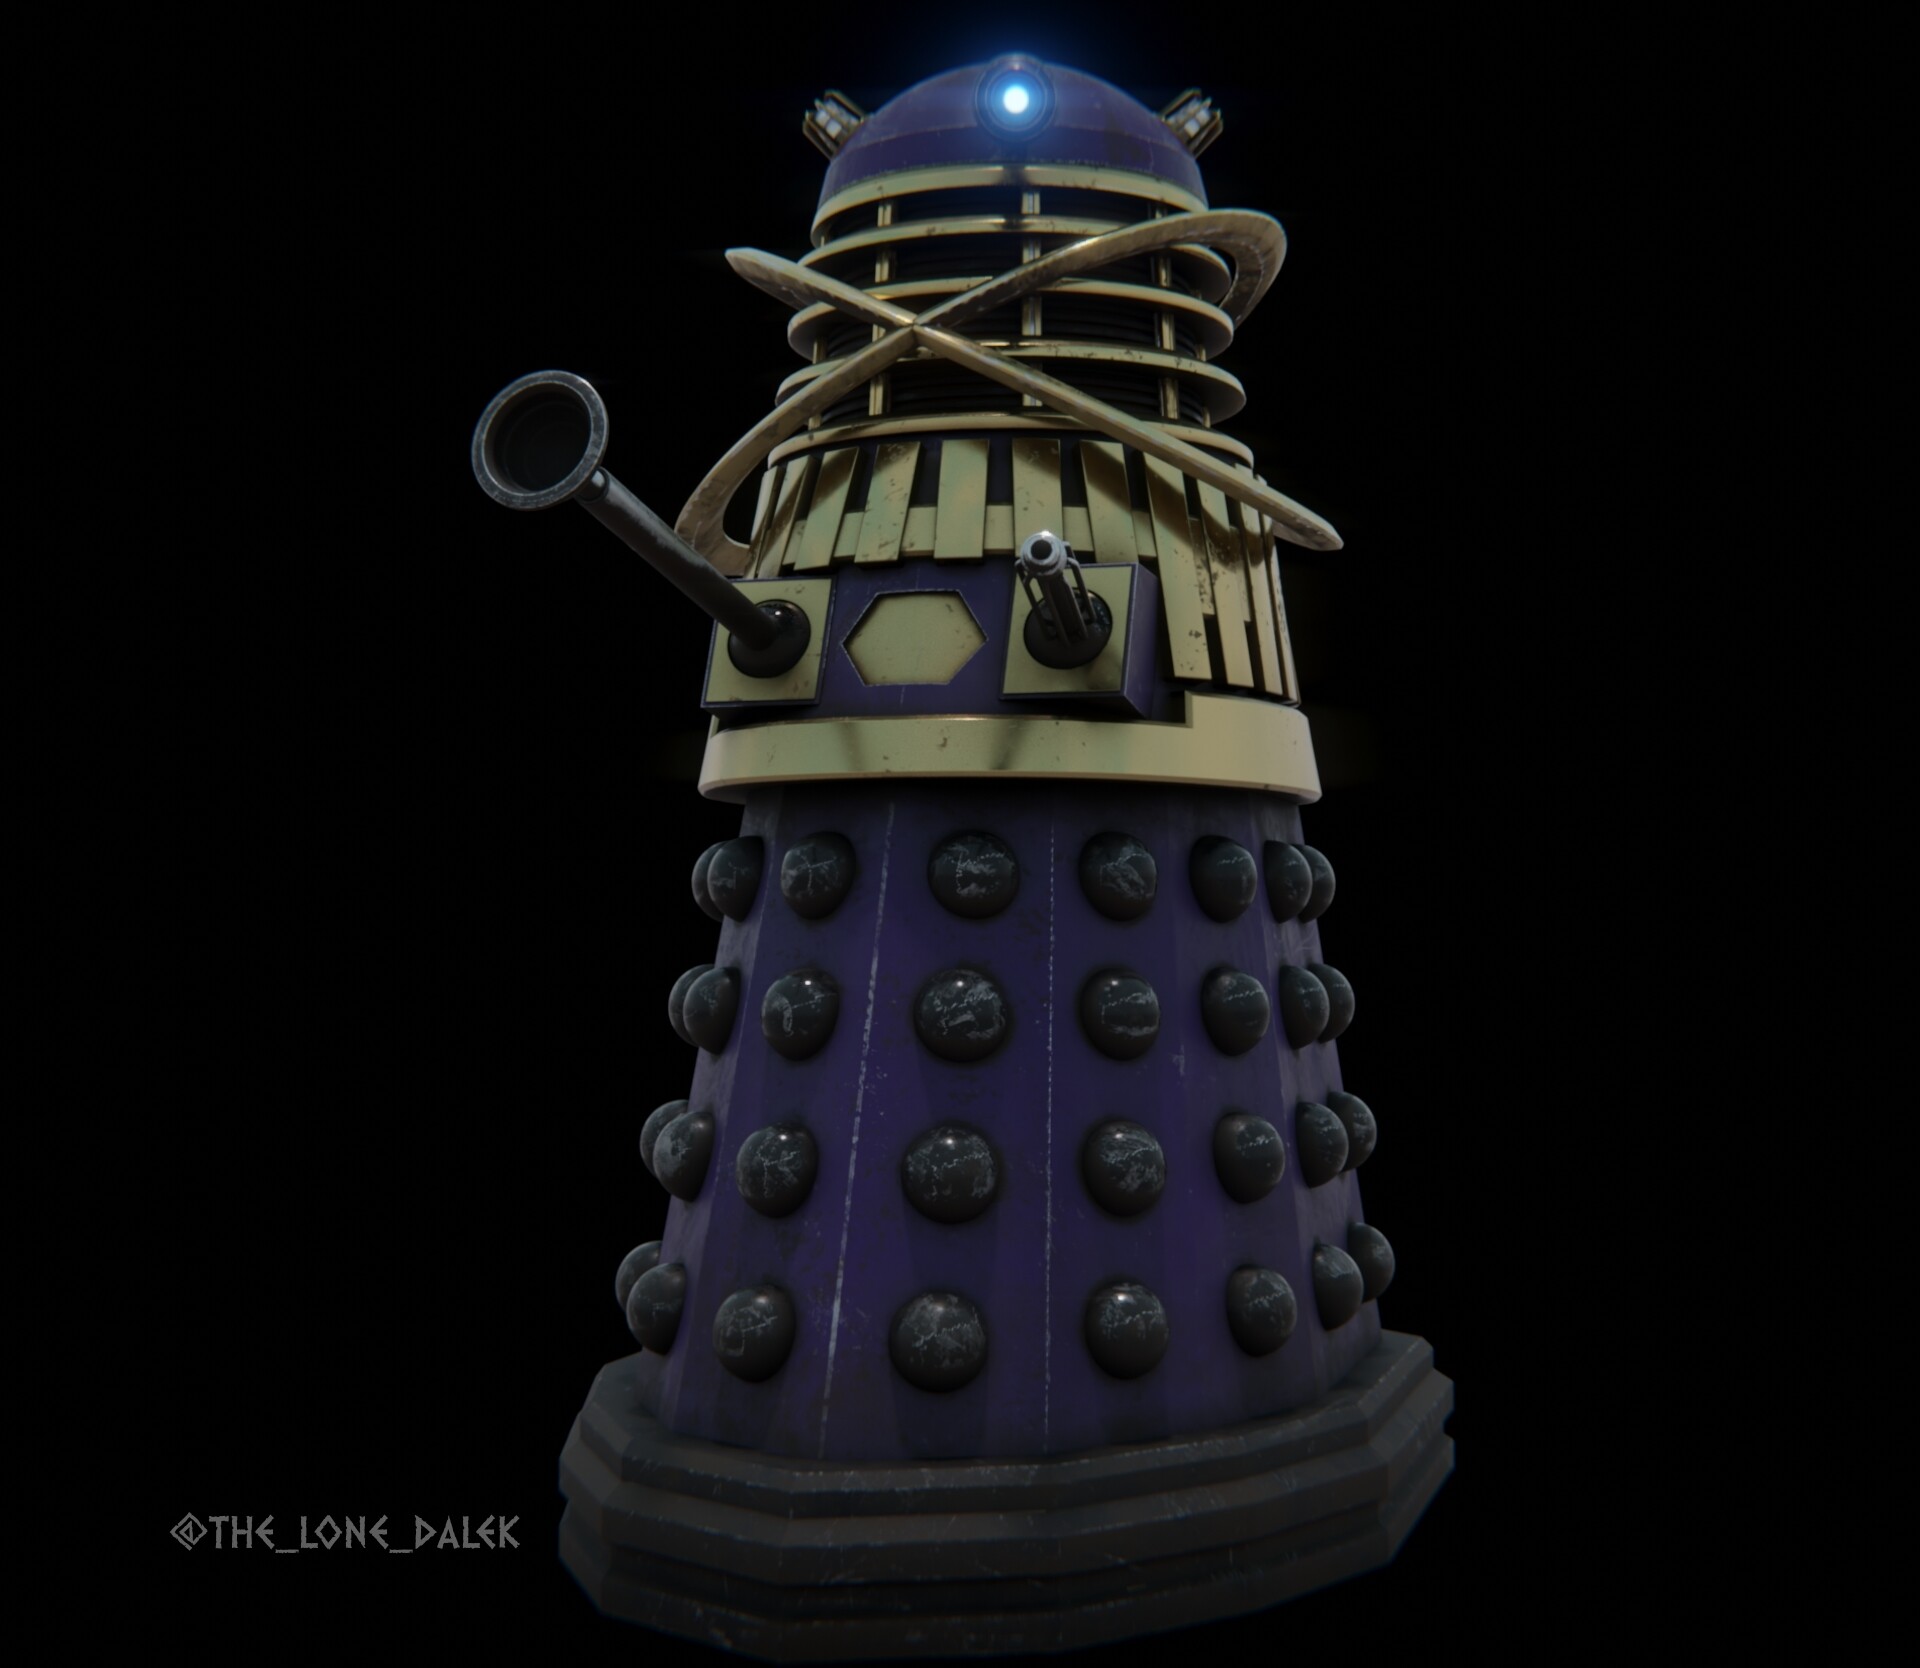 Dalek Time Controller, Dalek Mod Wiki